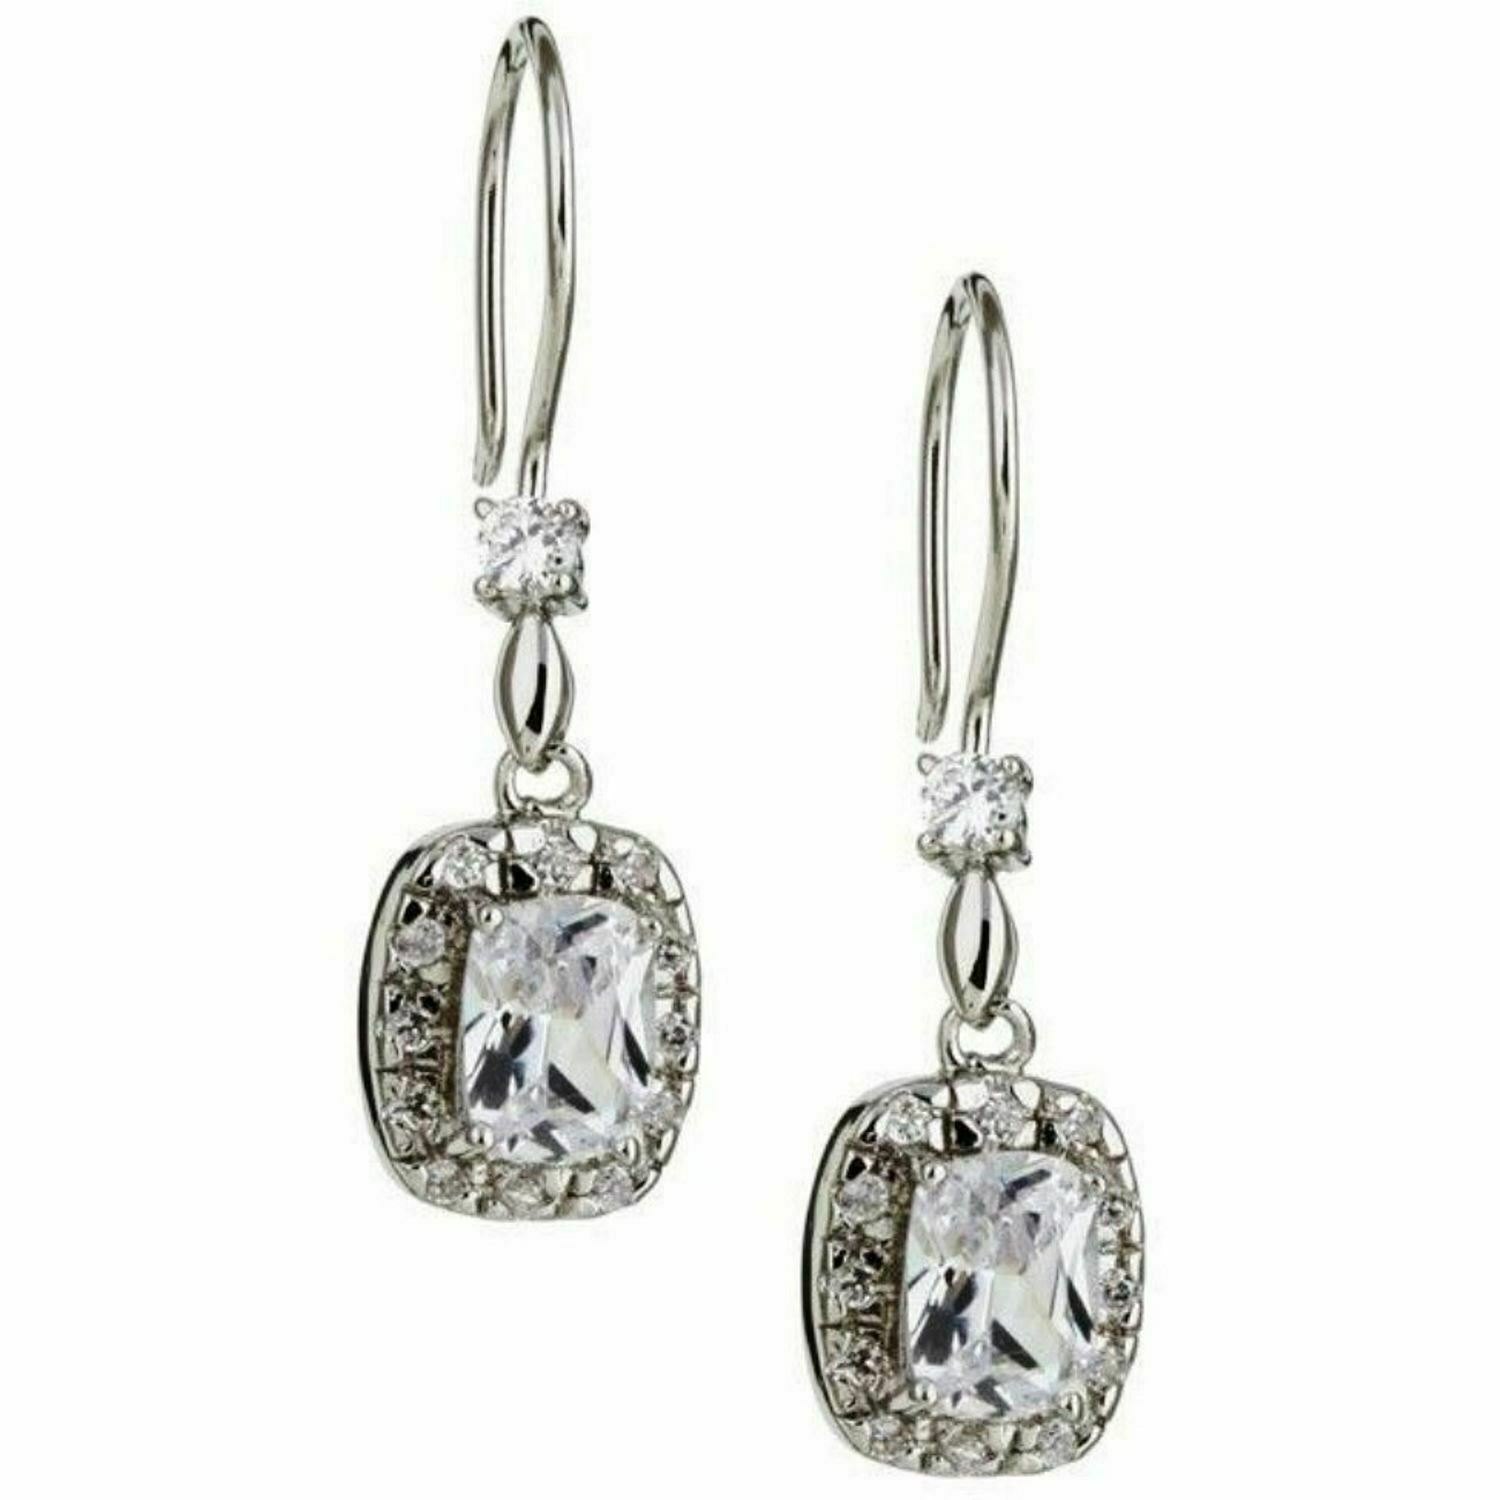 Primary image for Celebrity Princess Cut Diamond Alternatives Dangle Earrings 14k Gold over Base 